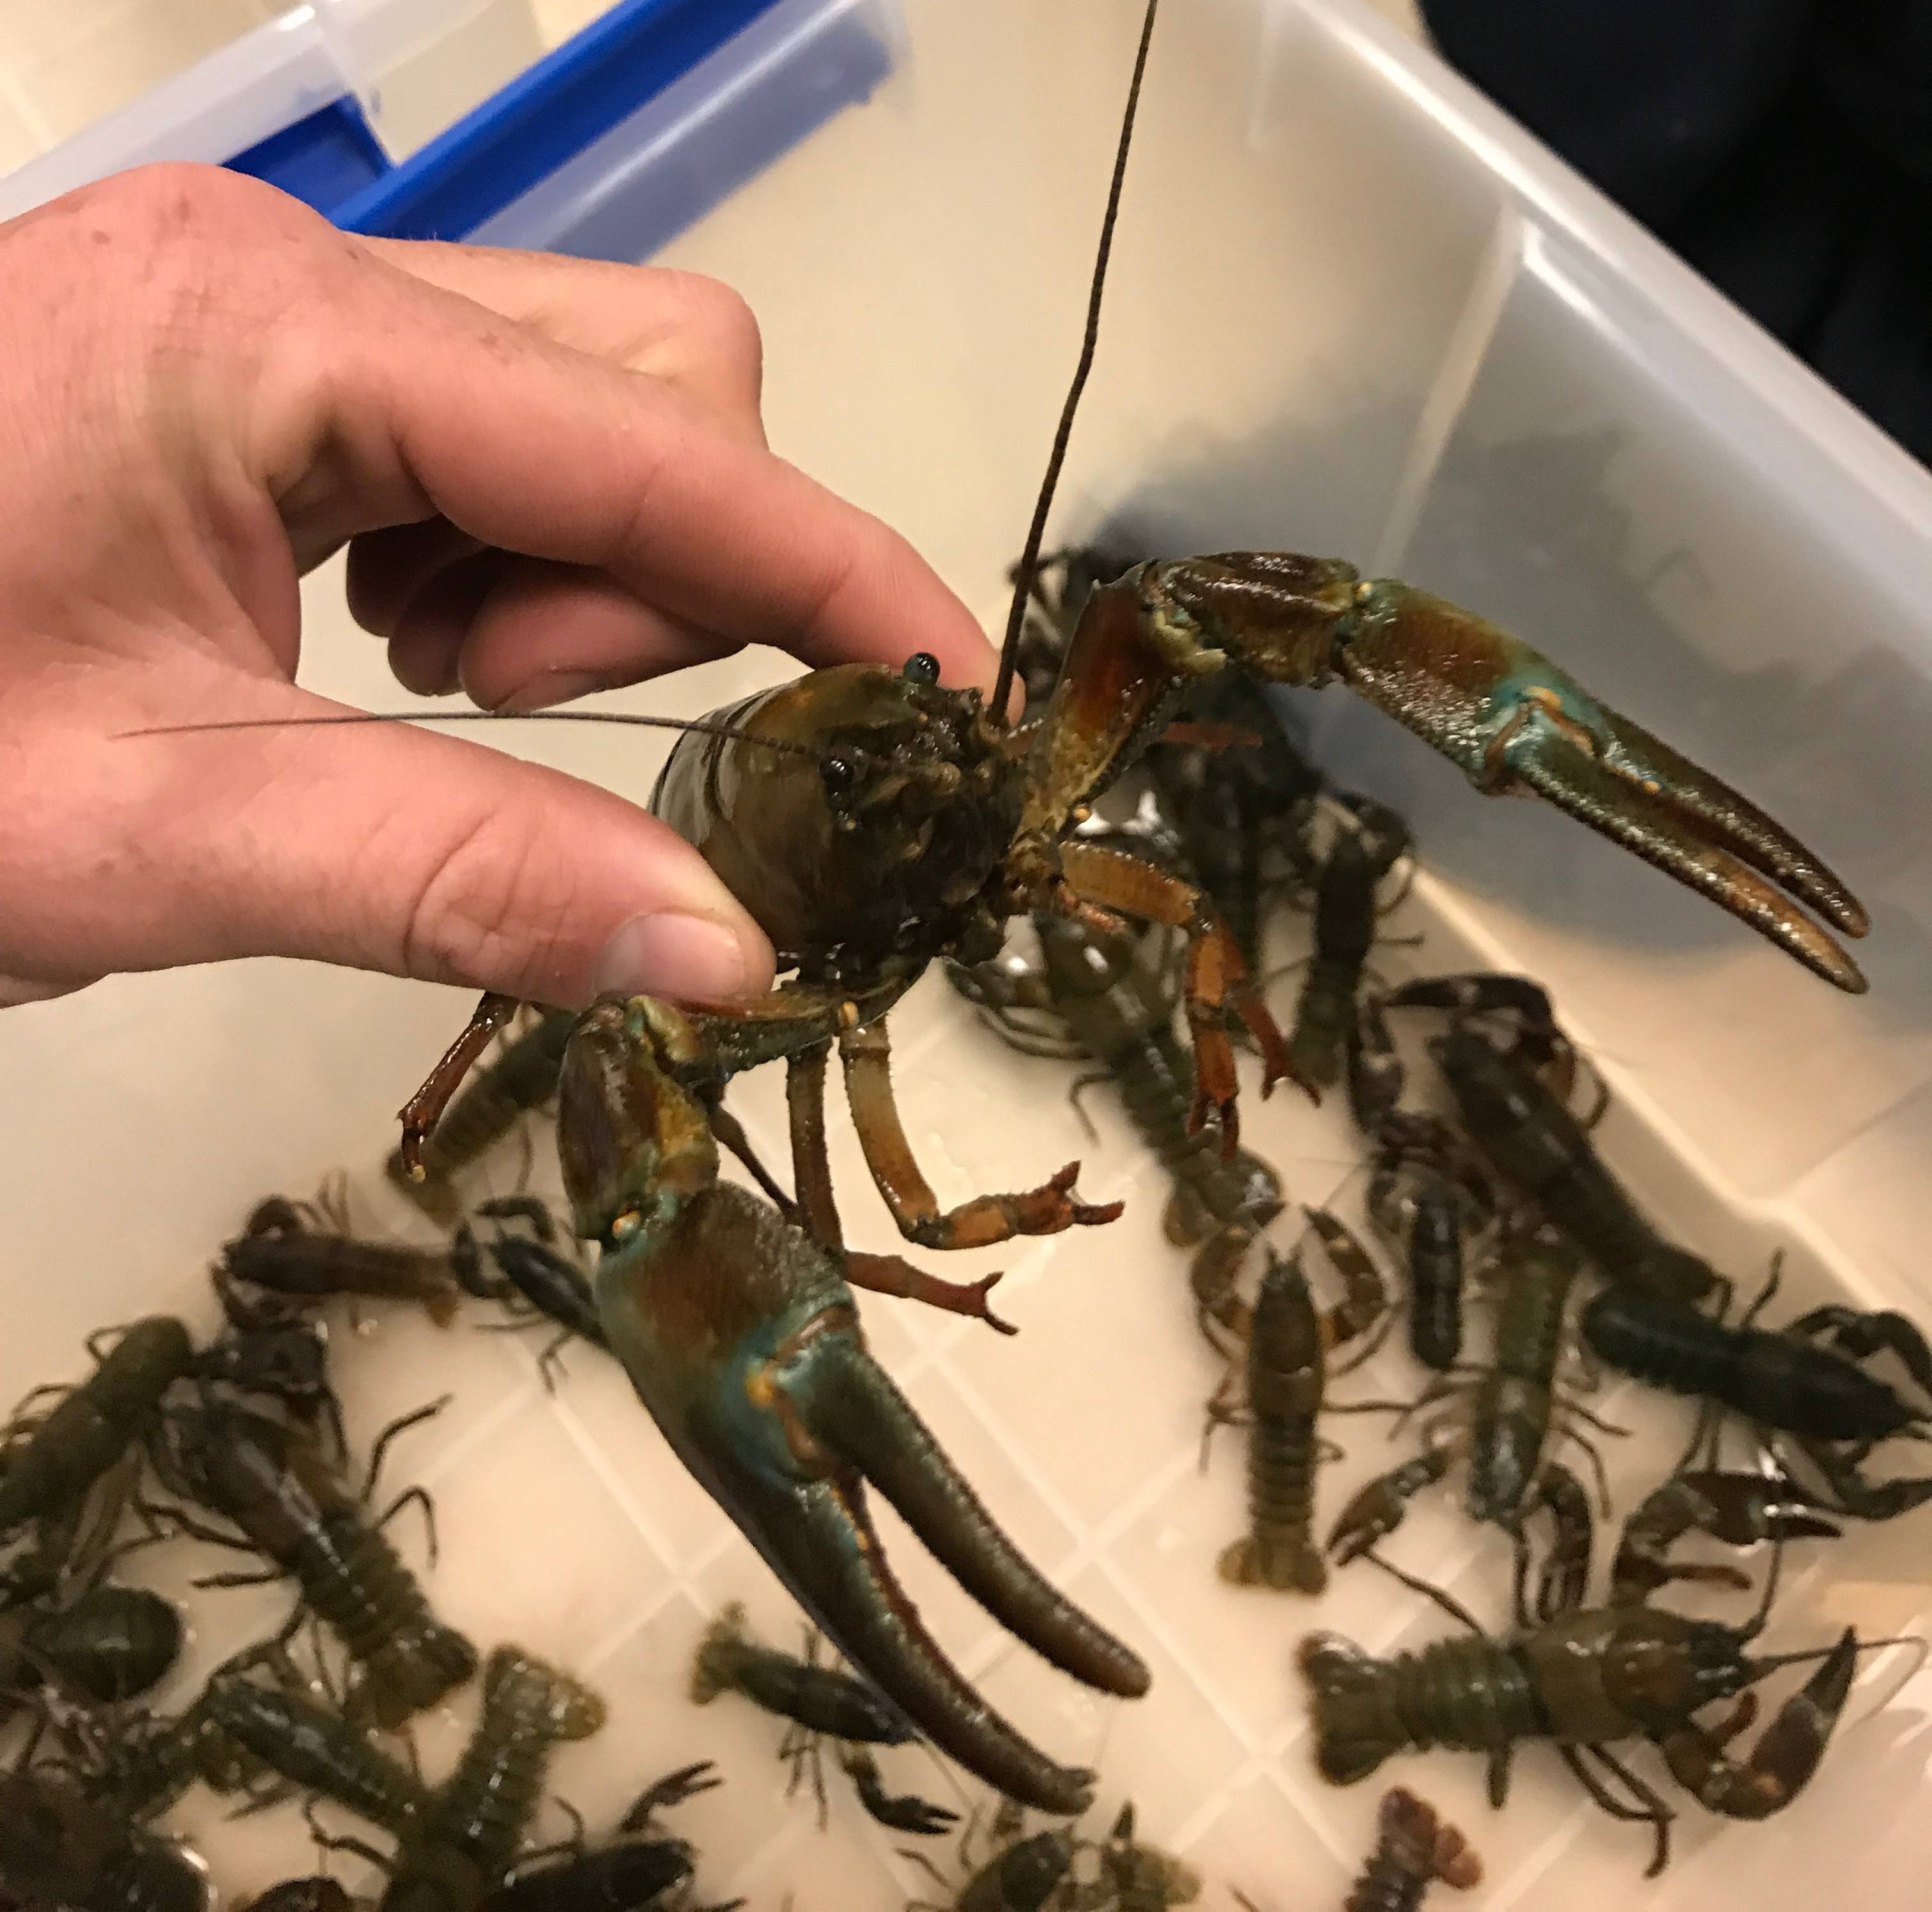 Invasive signal crayfish